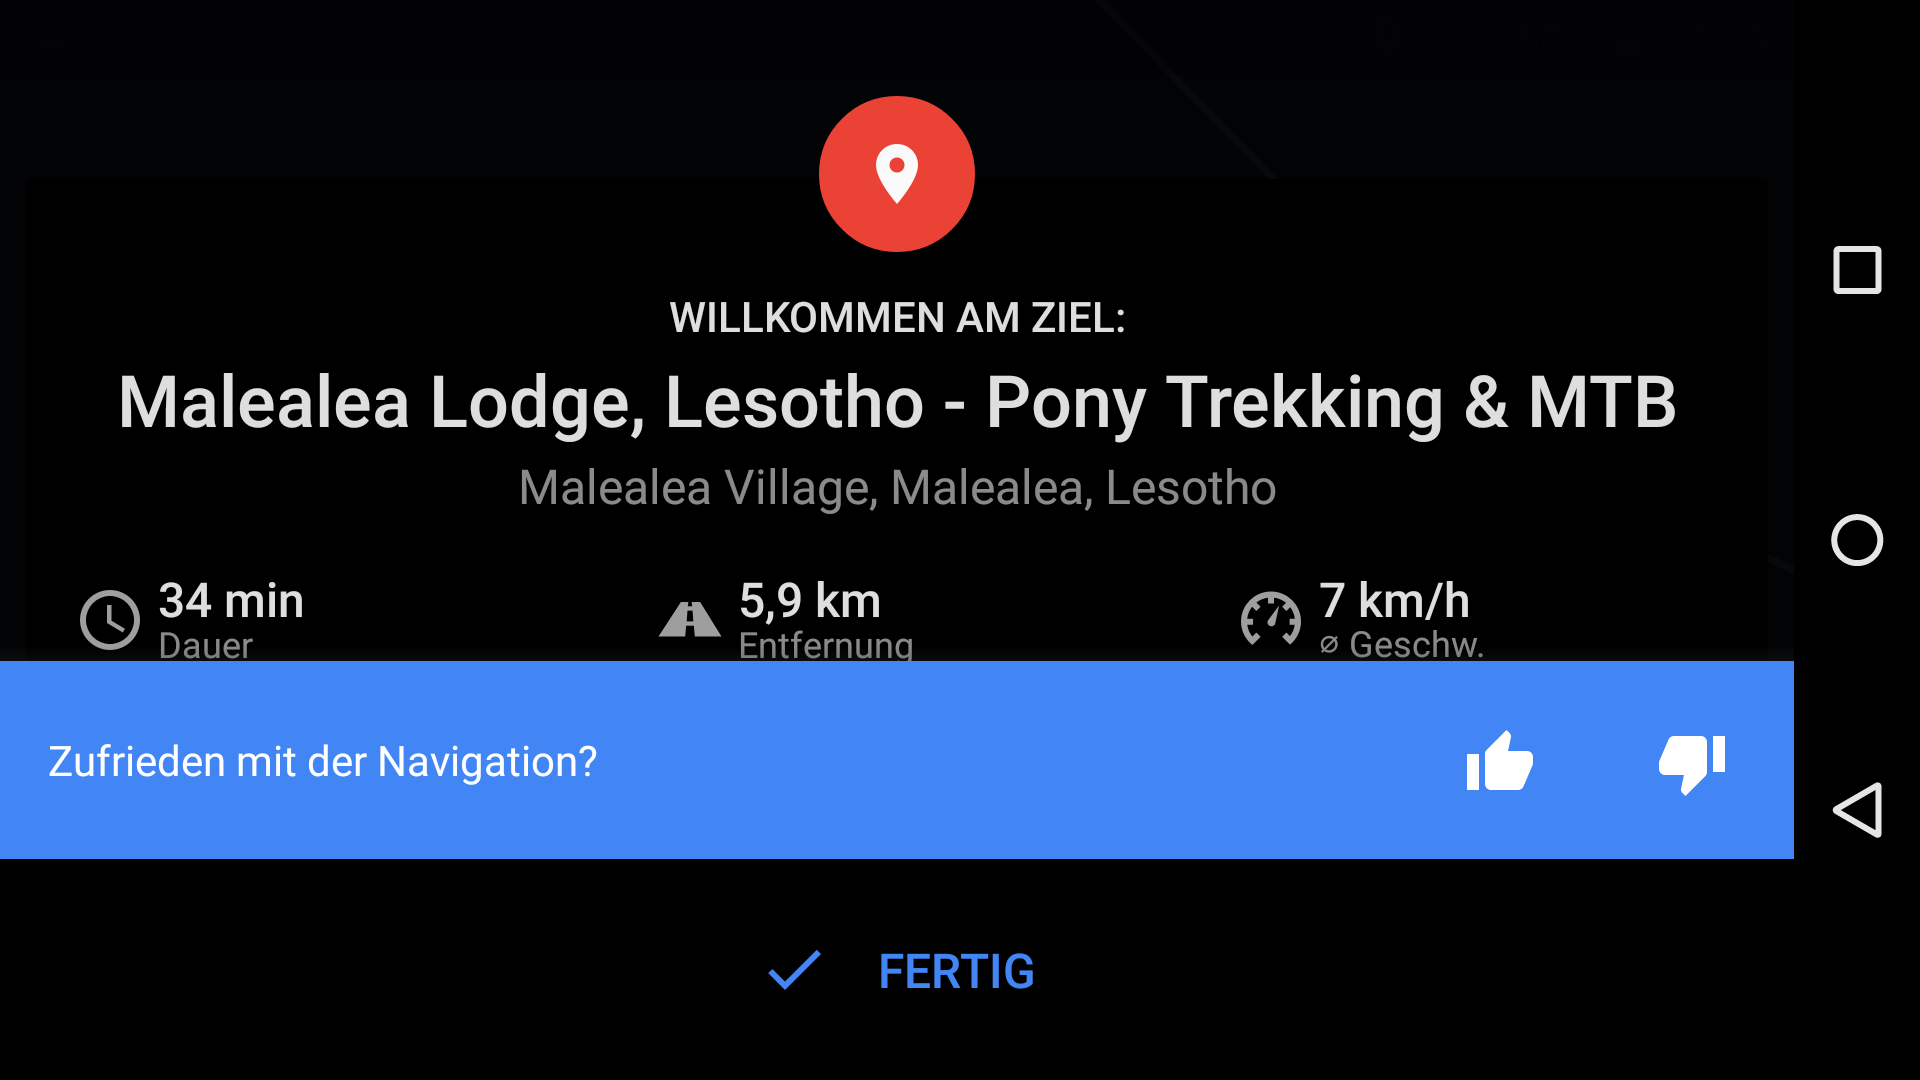 Malealea Lodge, Lesotho: Ponyhof, Trekking und Moutainbiking